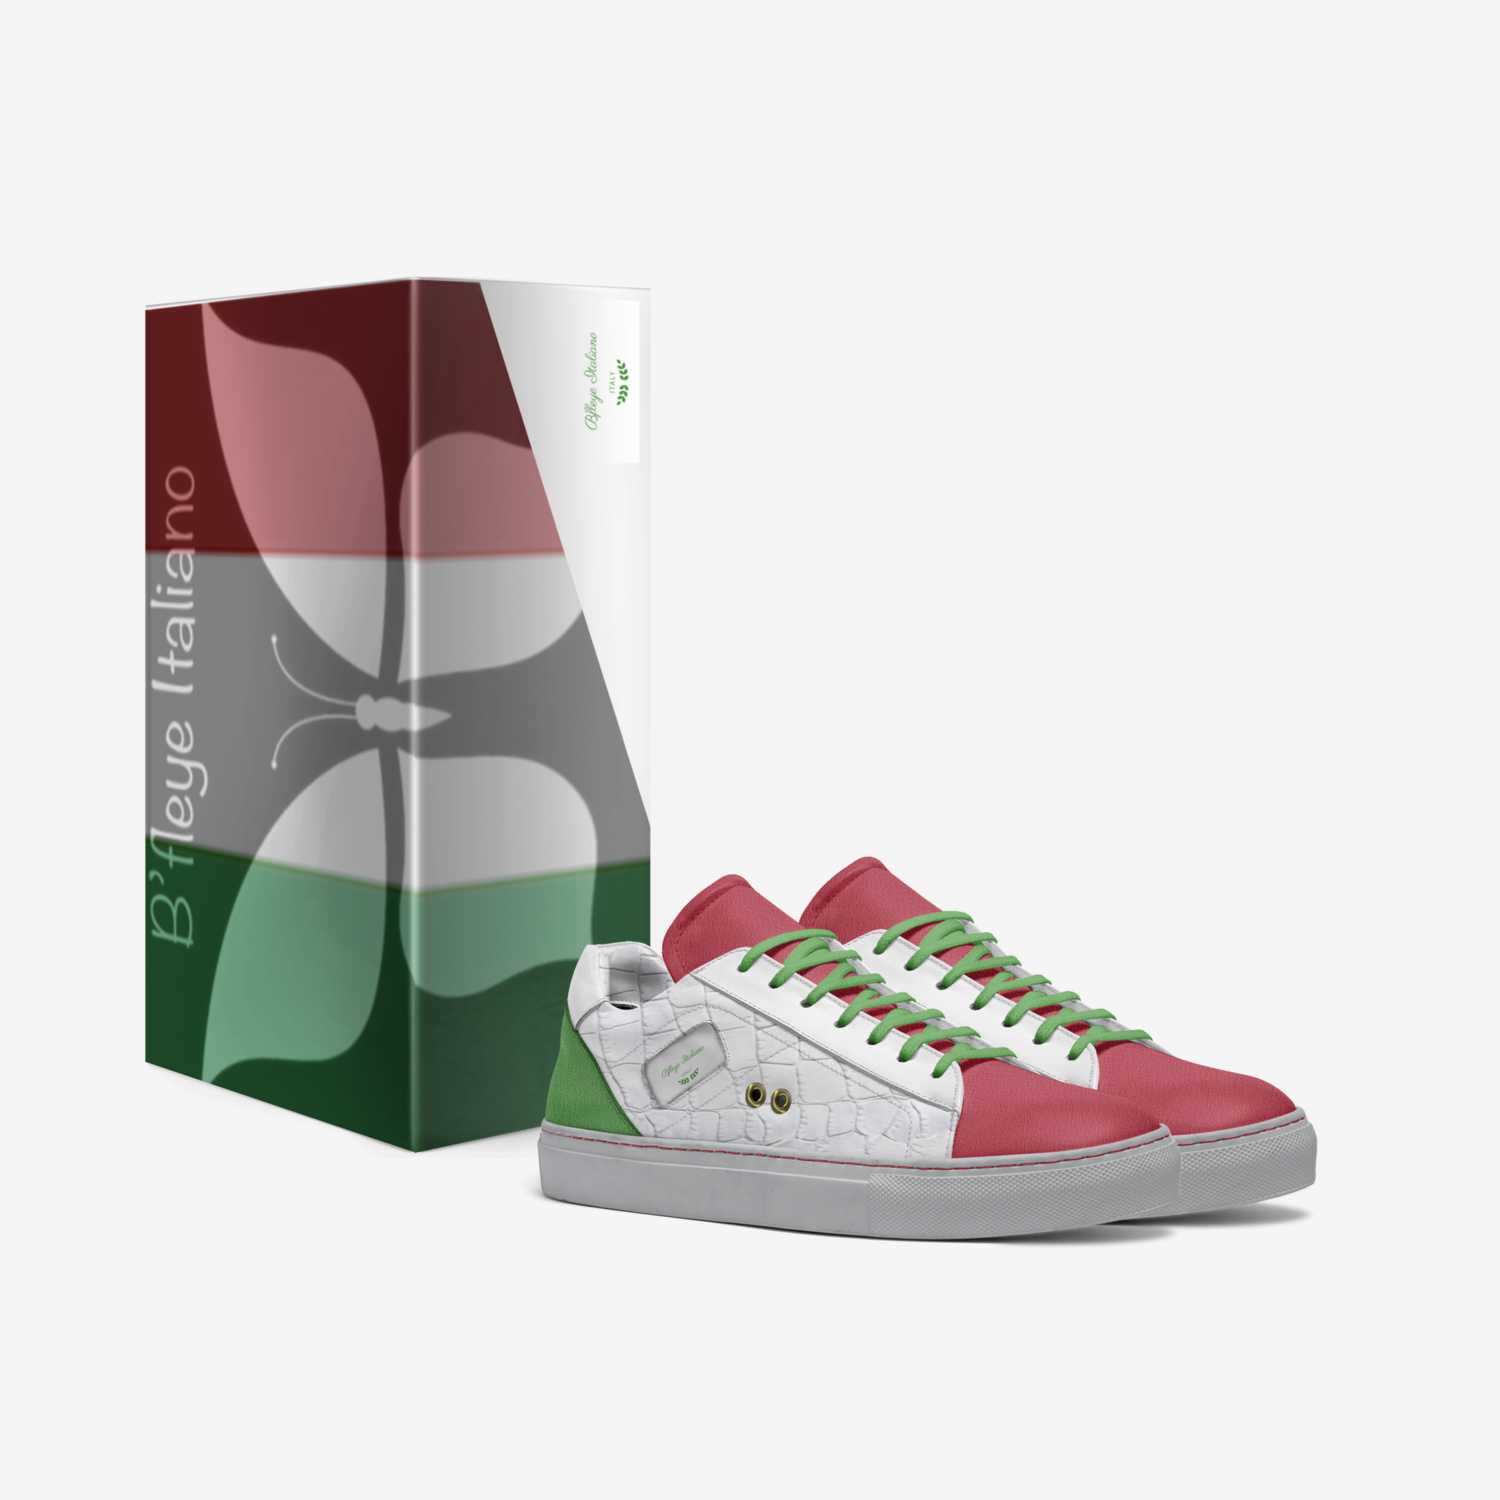 B’fleye Italiano custom made in Italy shoes by Cj Butterfleye | Box view